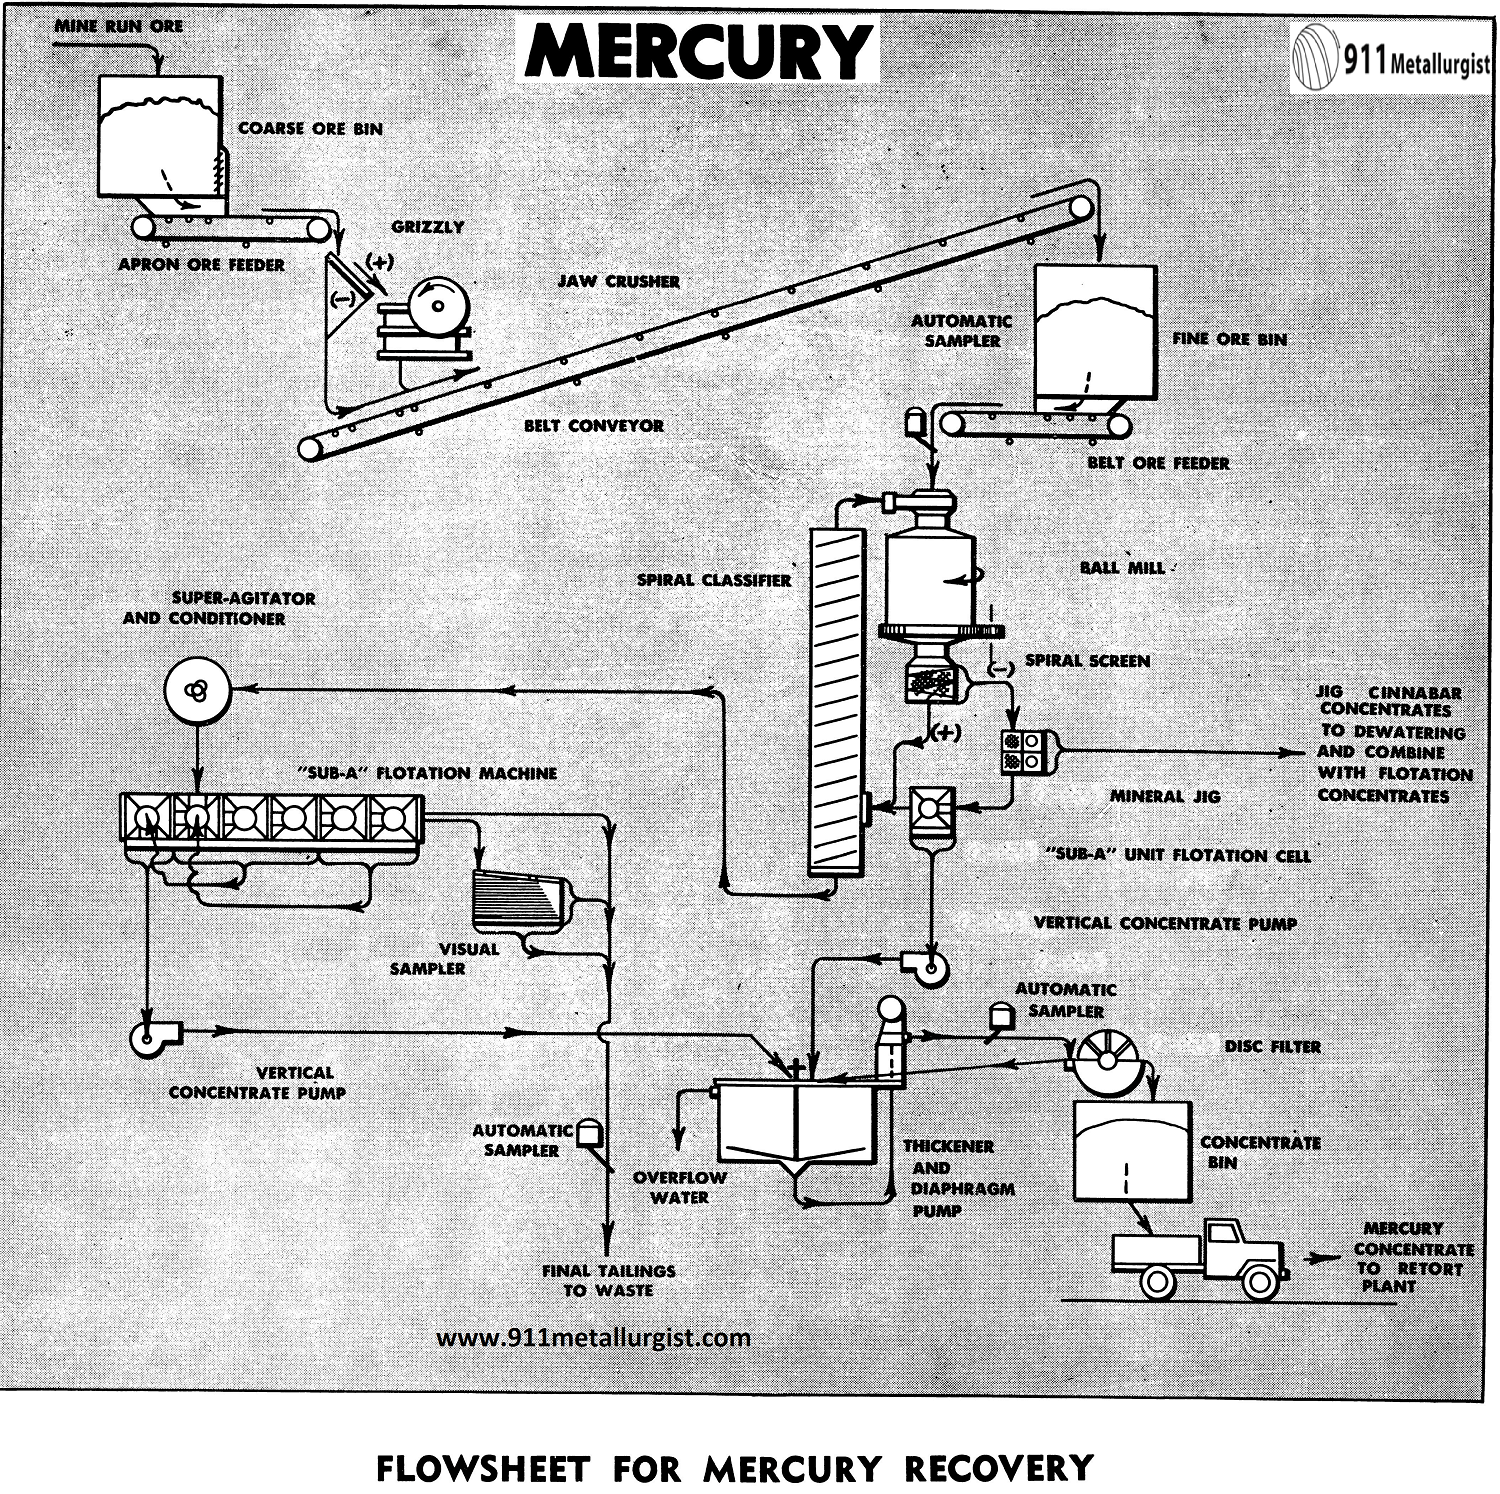 Mercury Ore Processing